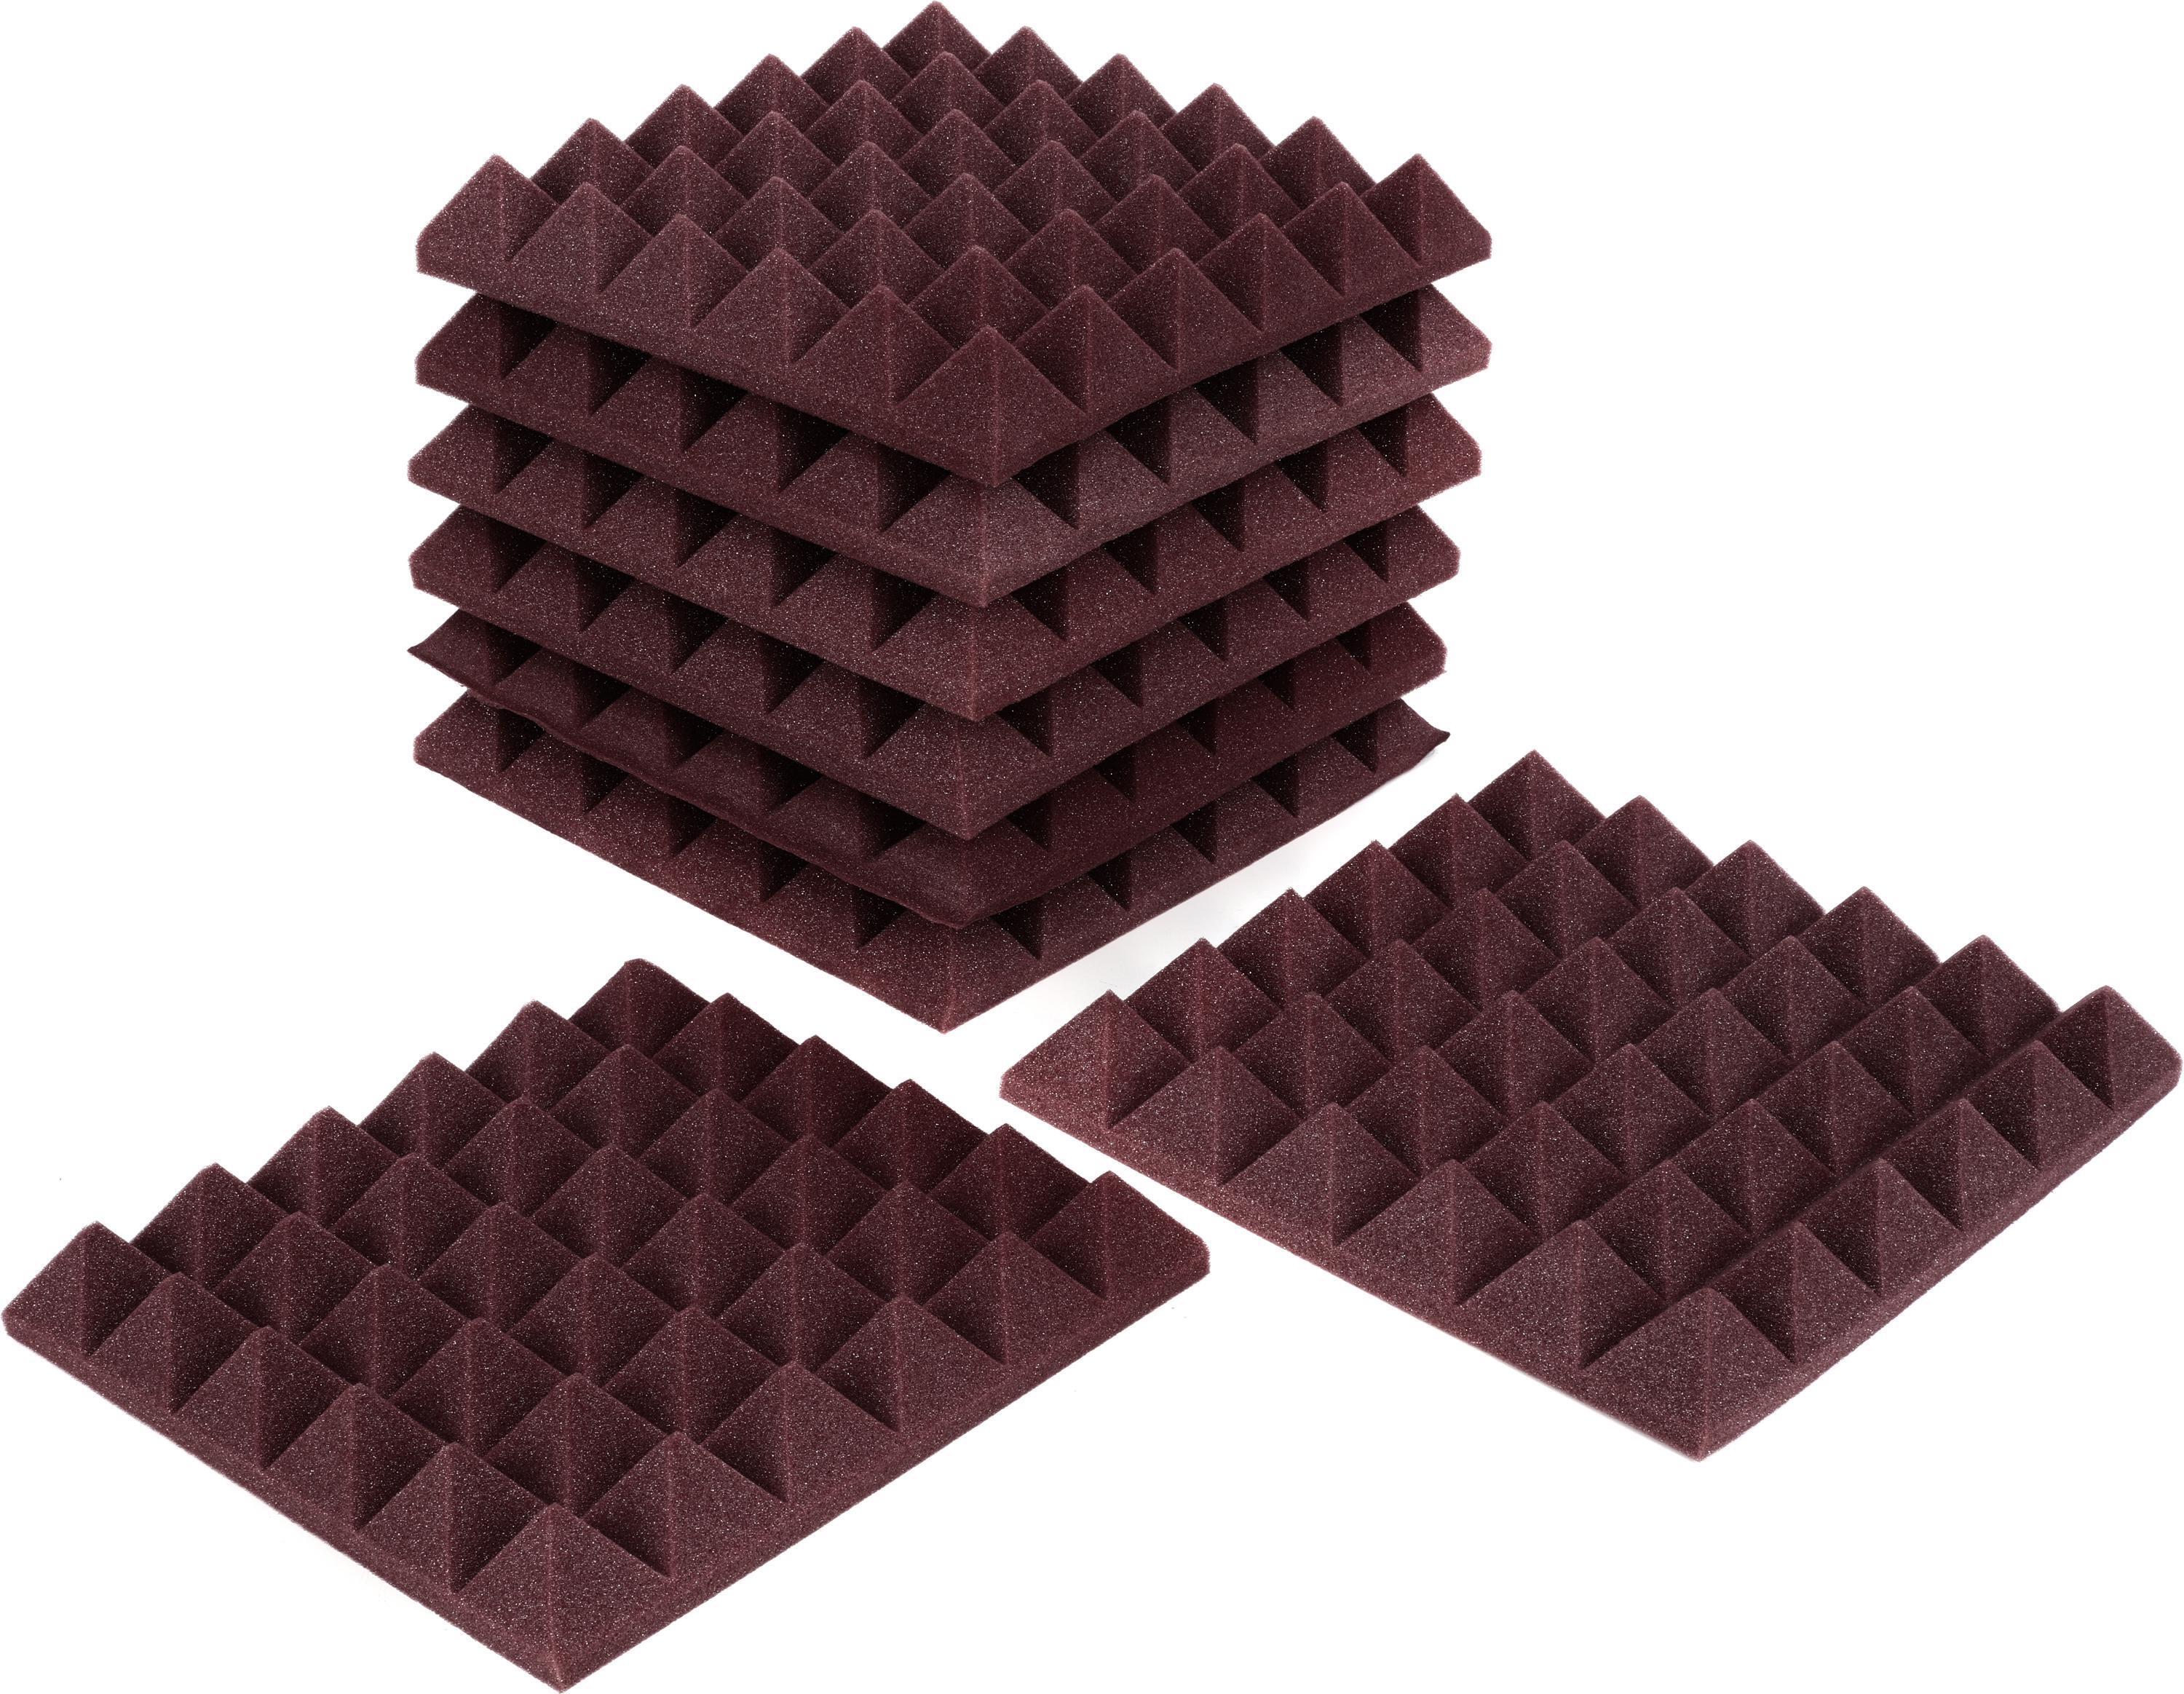 Bundled Item: Gator Acoustic Pyramid Panels - 1x1 foot 8-pack - Burgundy